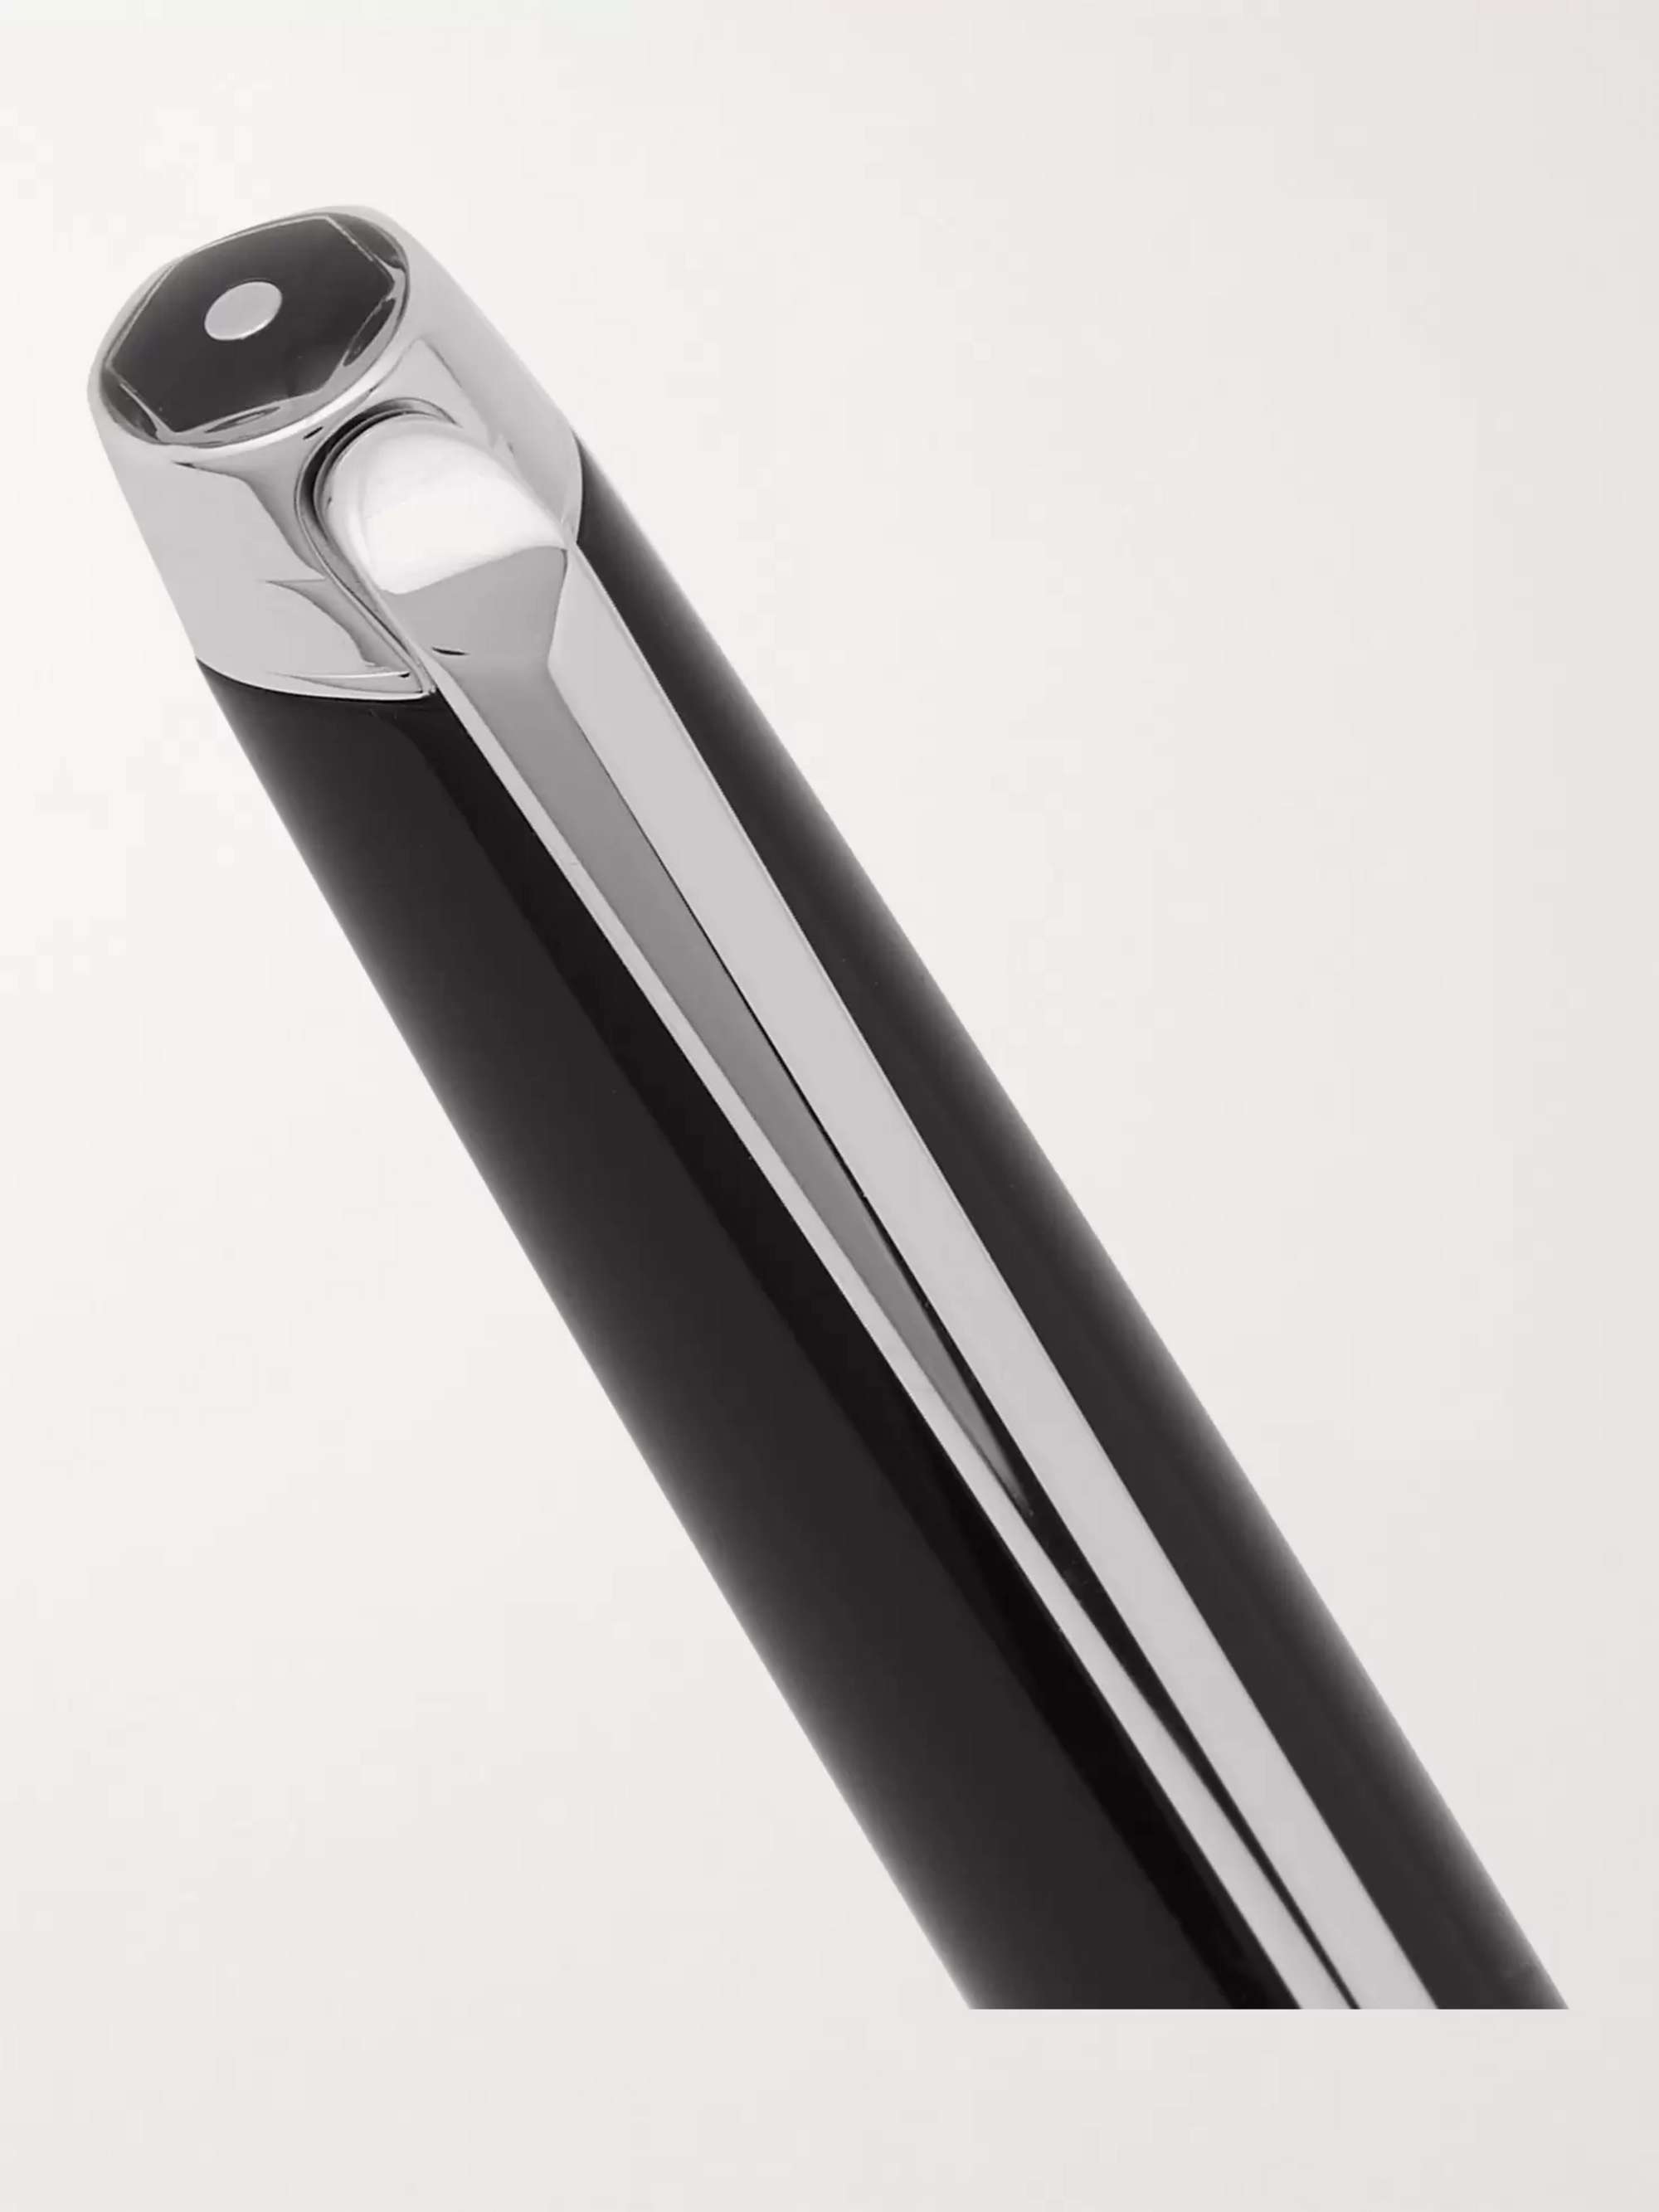 CARAN D'ACHE Léman Bi-Fonction Rhodium and Silver-Coated Lacquered Ballpoint Pen